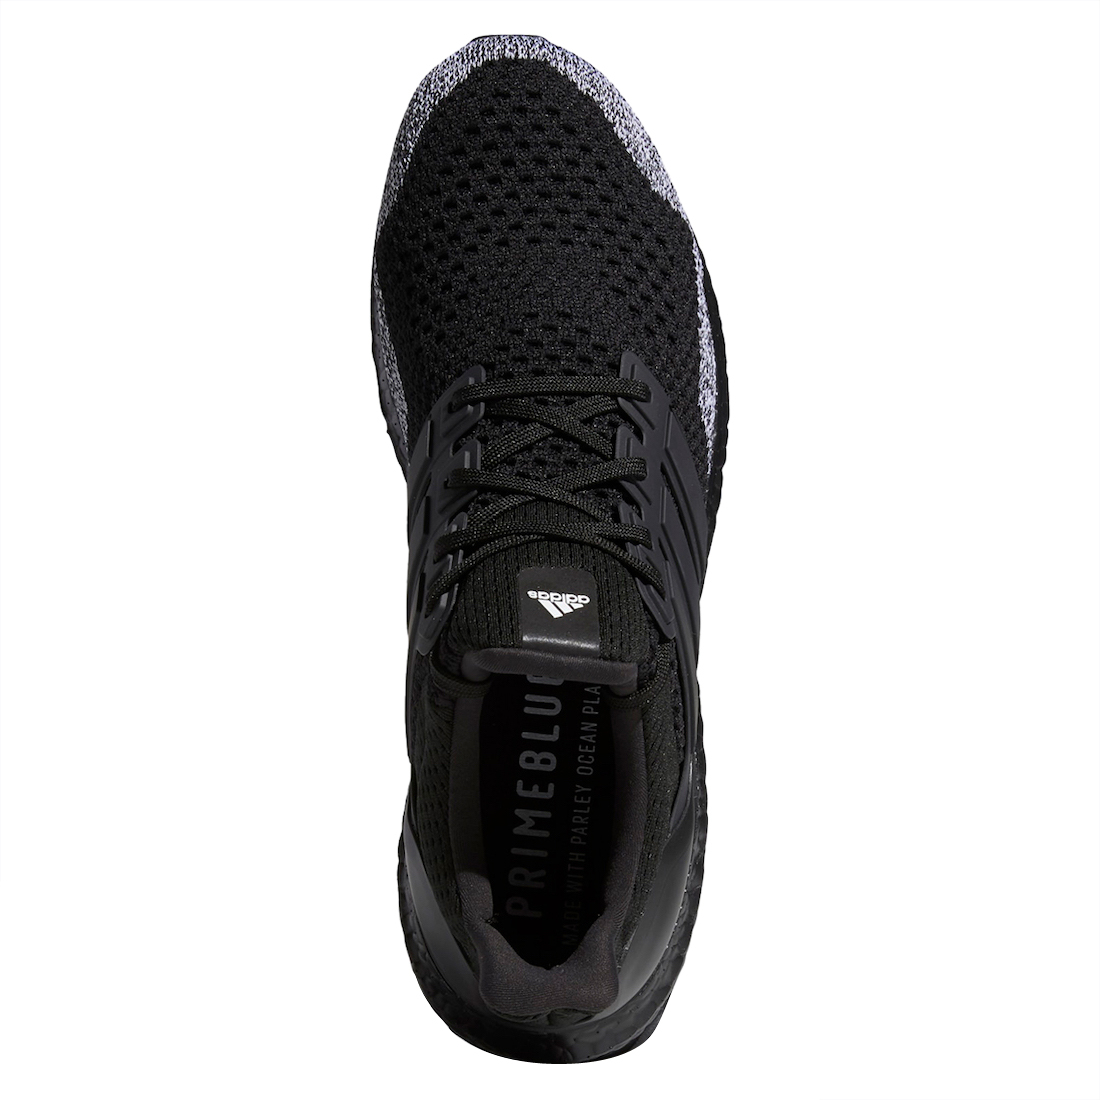 adidas Ultra Boost 1.0 DNA Oreo Toe - Aug 2021 - GZ3150